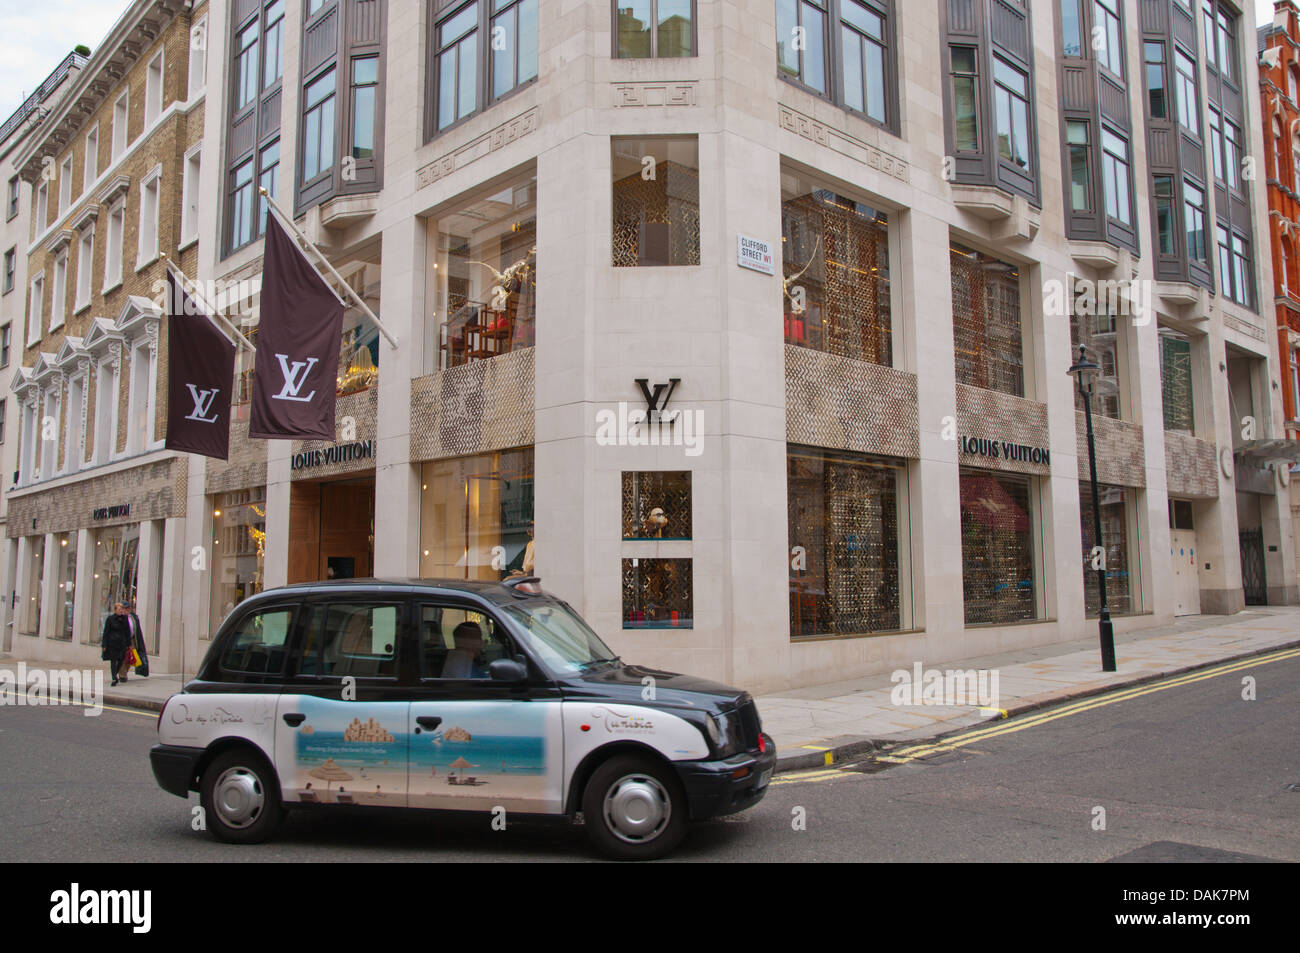 Louis Vuitton London City Store in London, United Kingdom